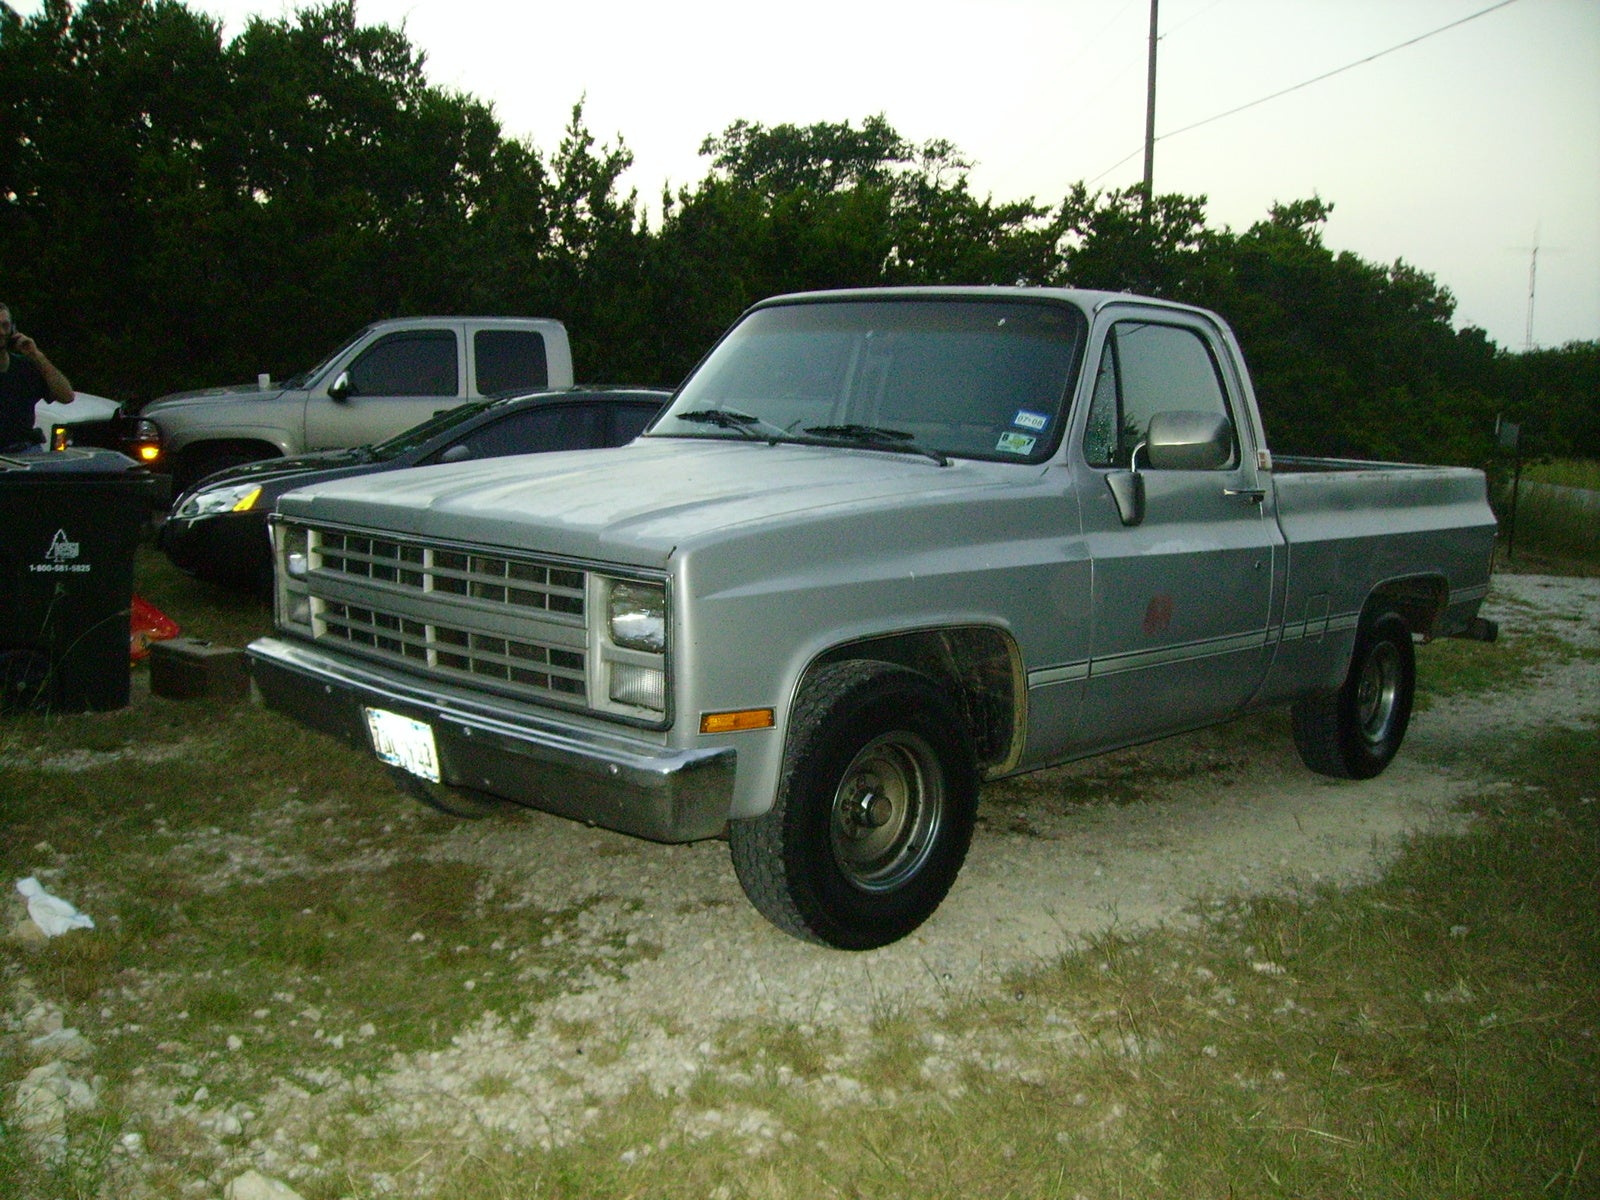 1985 Gmc sierra classic truck #5